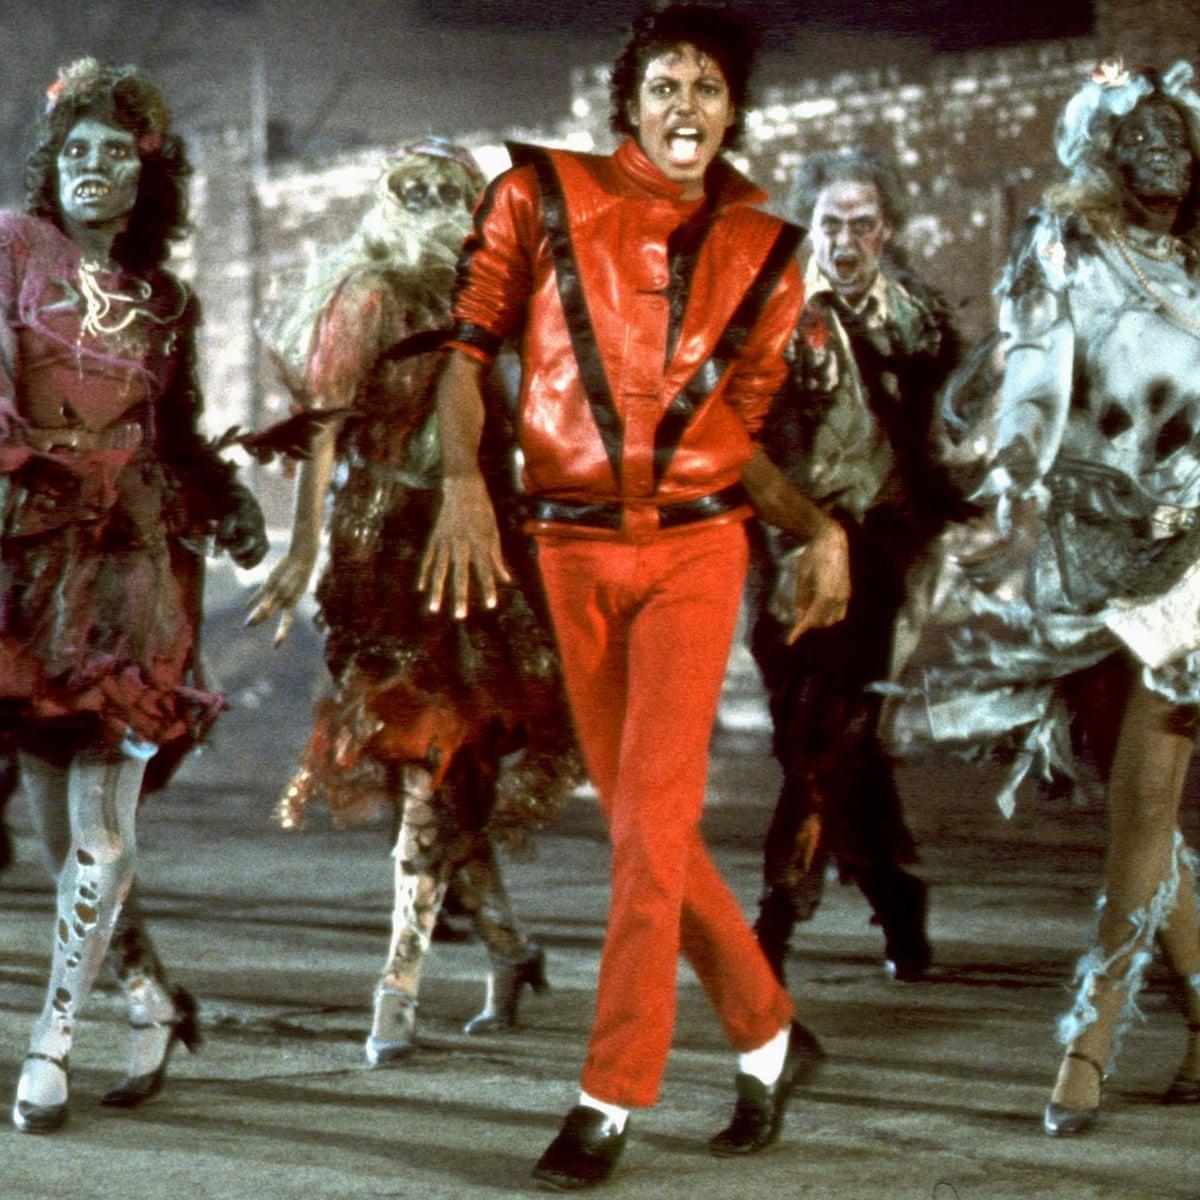 Michael Jackson “Thriller”.